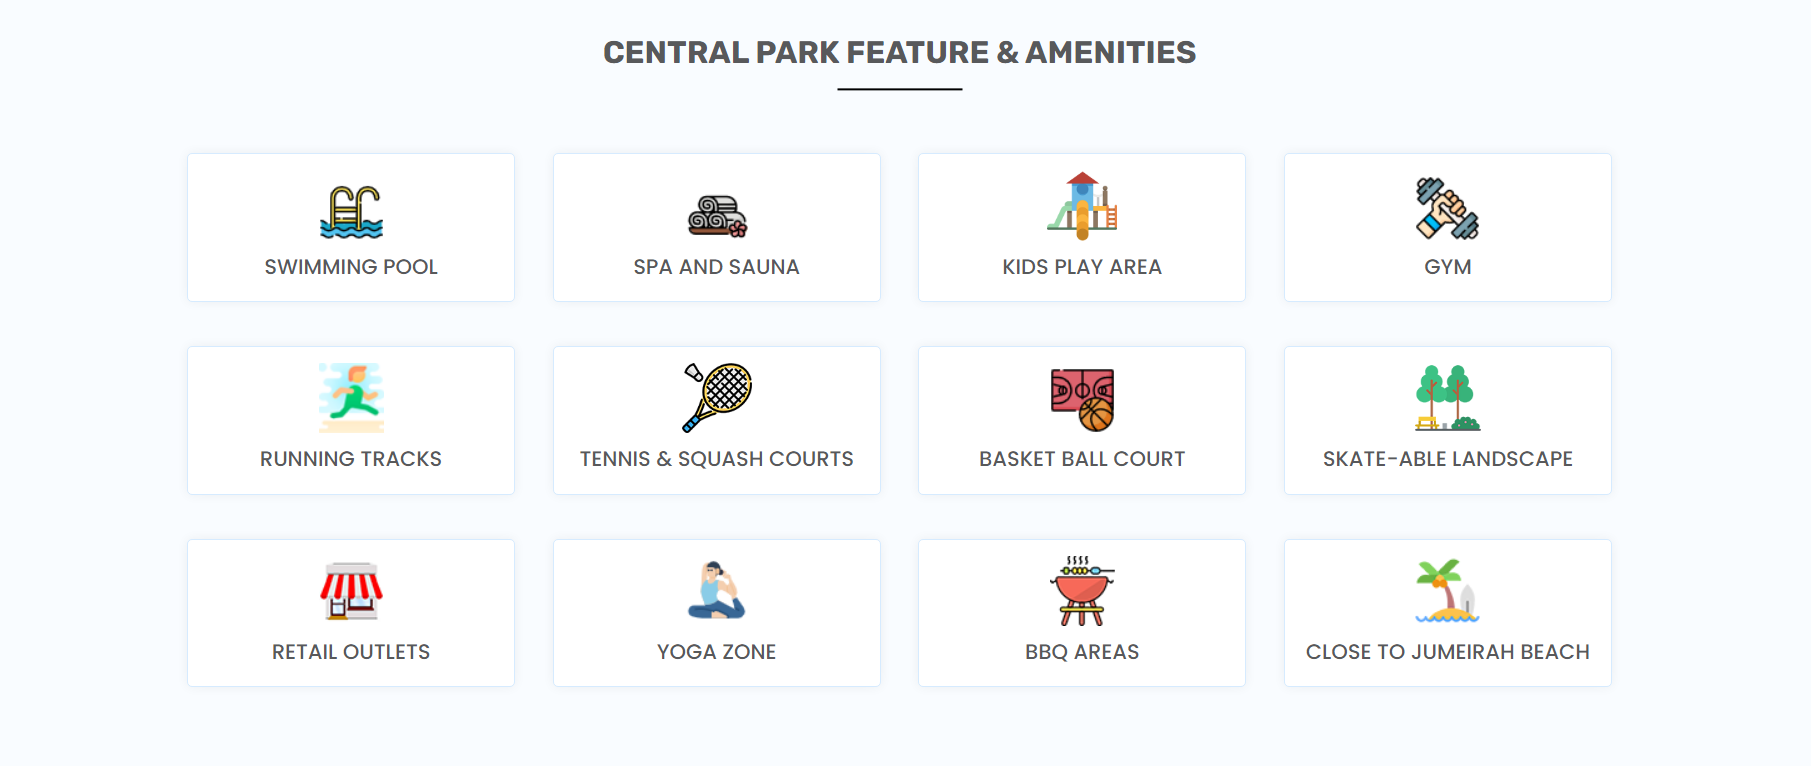 Central Park Feature & Amenities